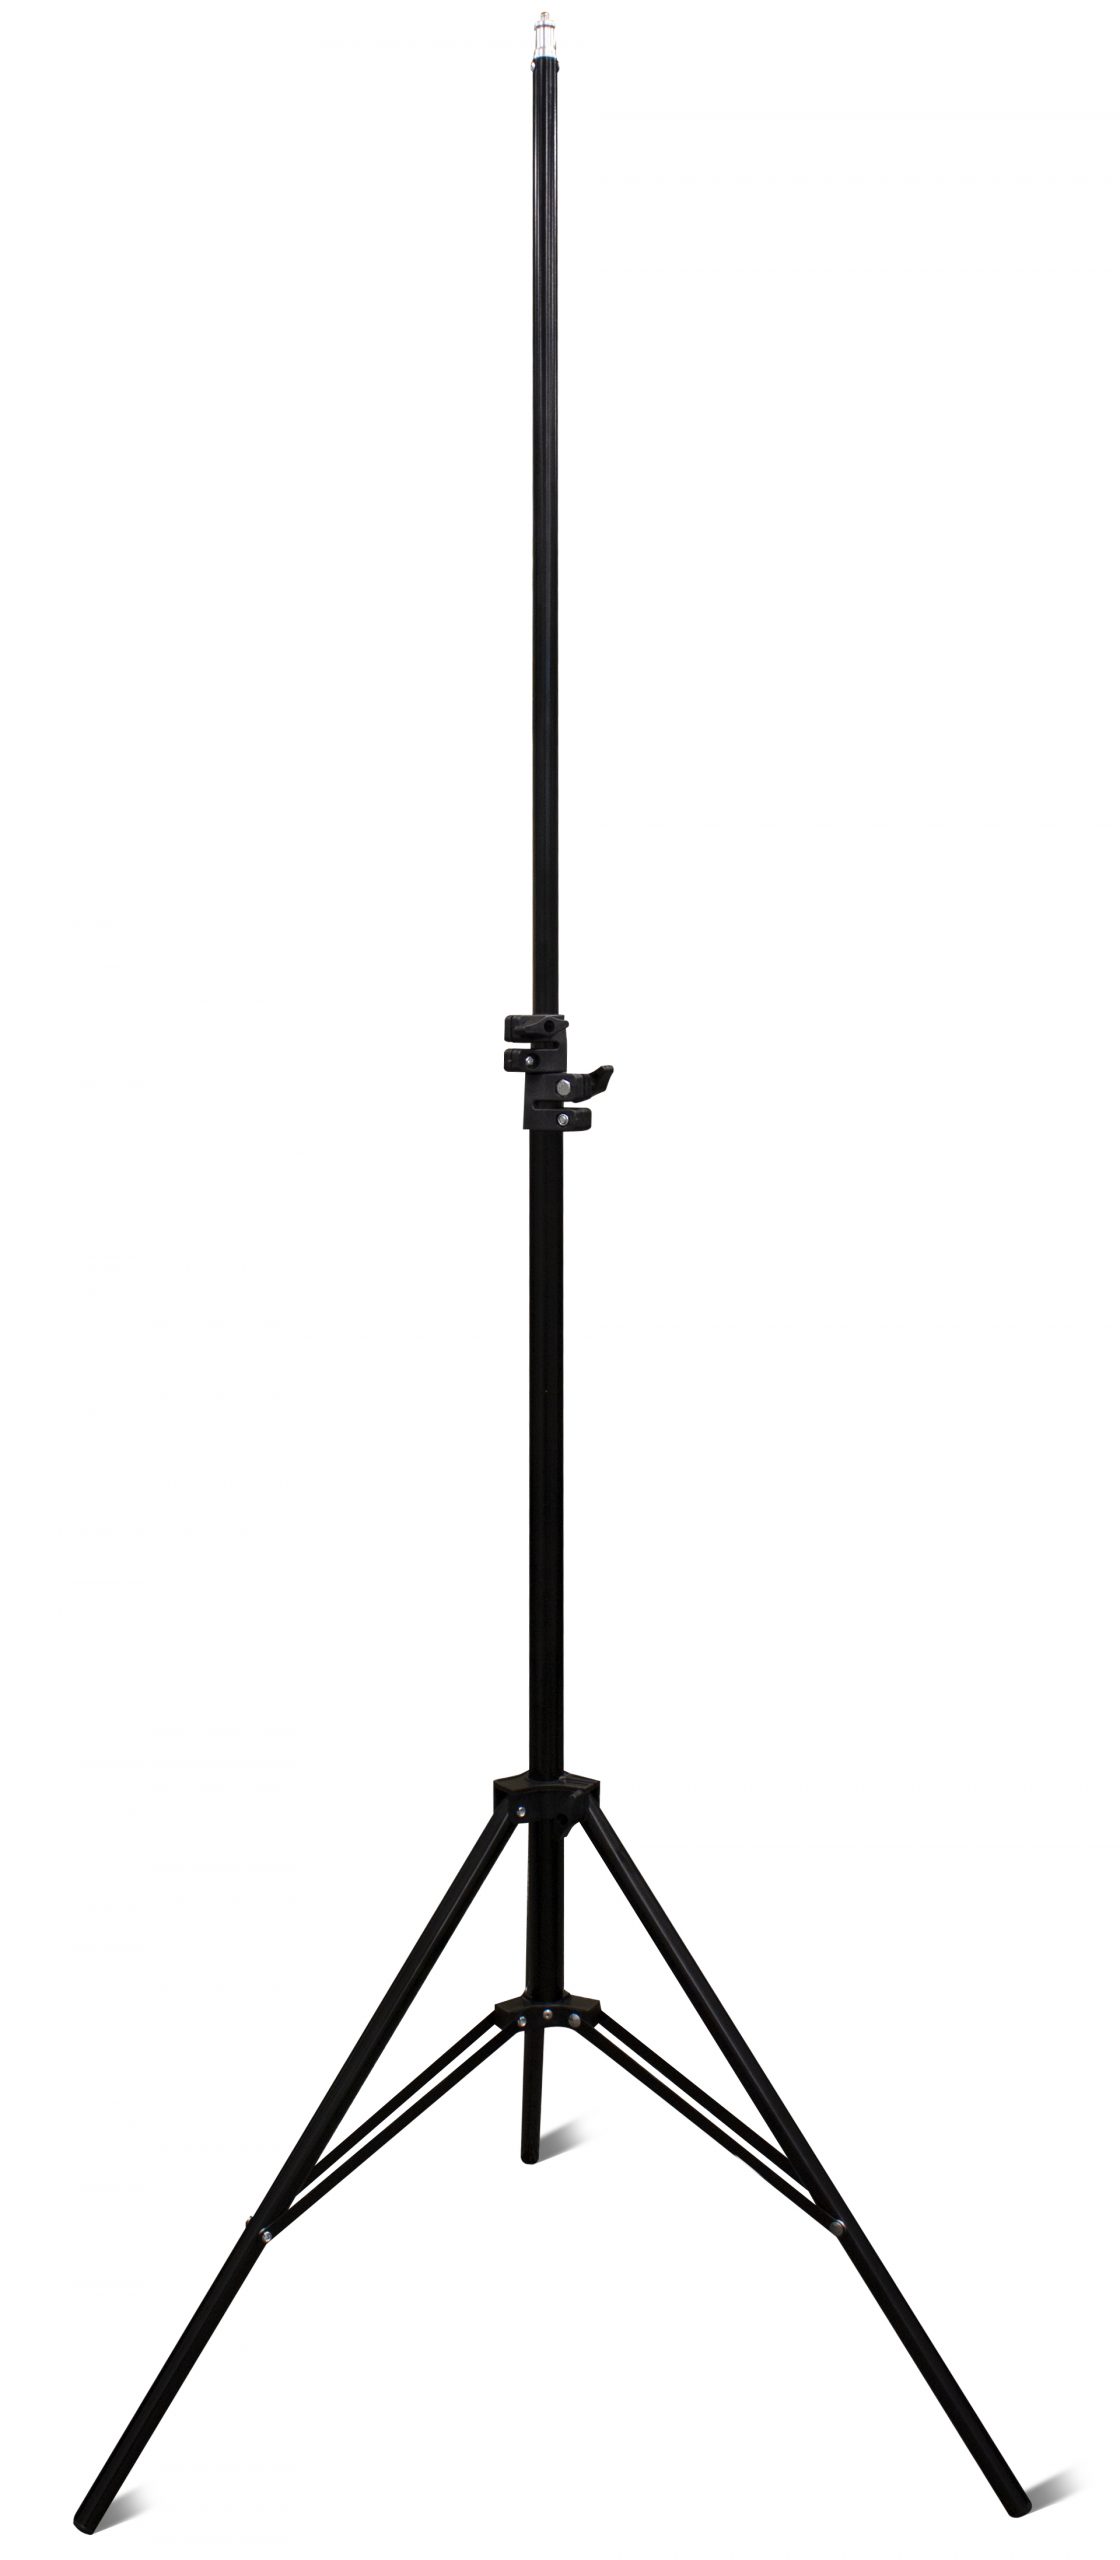 Infrared Gun Thermometer, Model 15041 - DeltaTrak